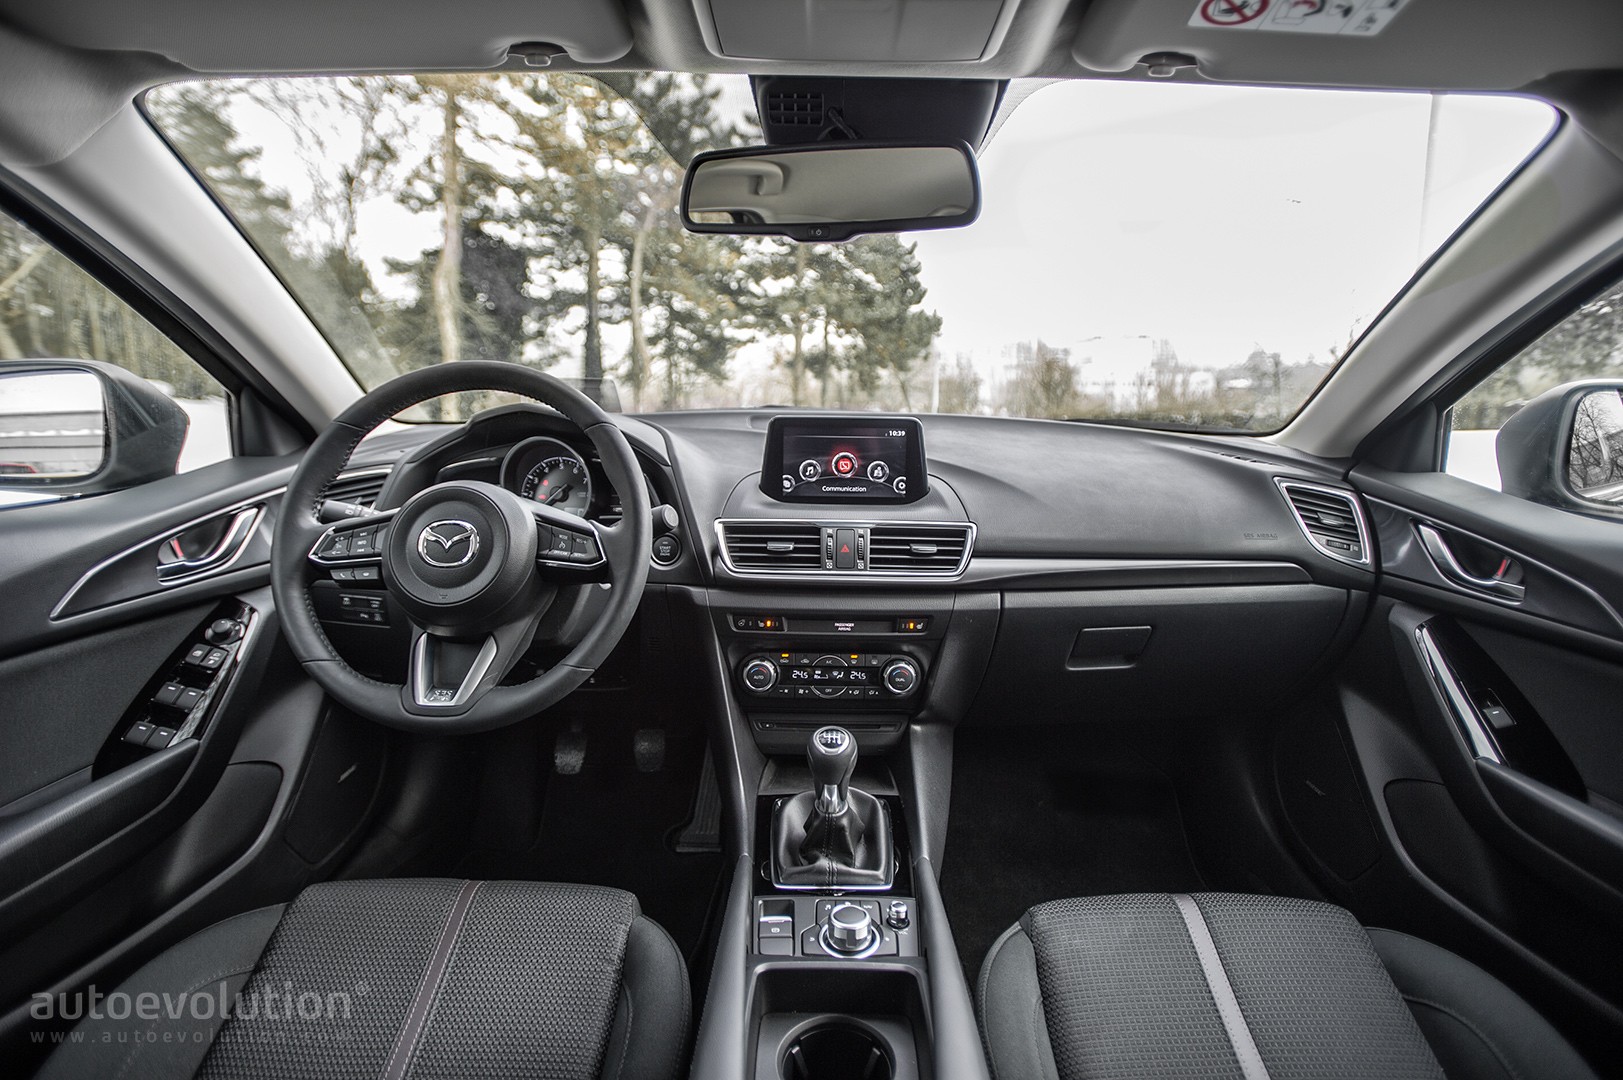 Driven 2017 Mazda3 Hatchback